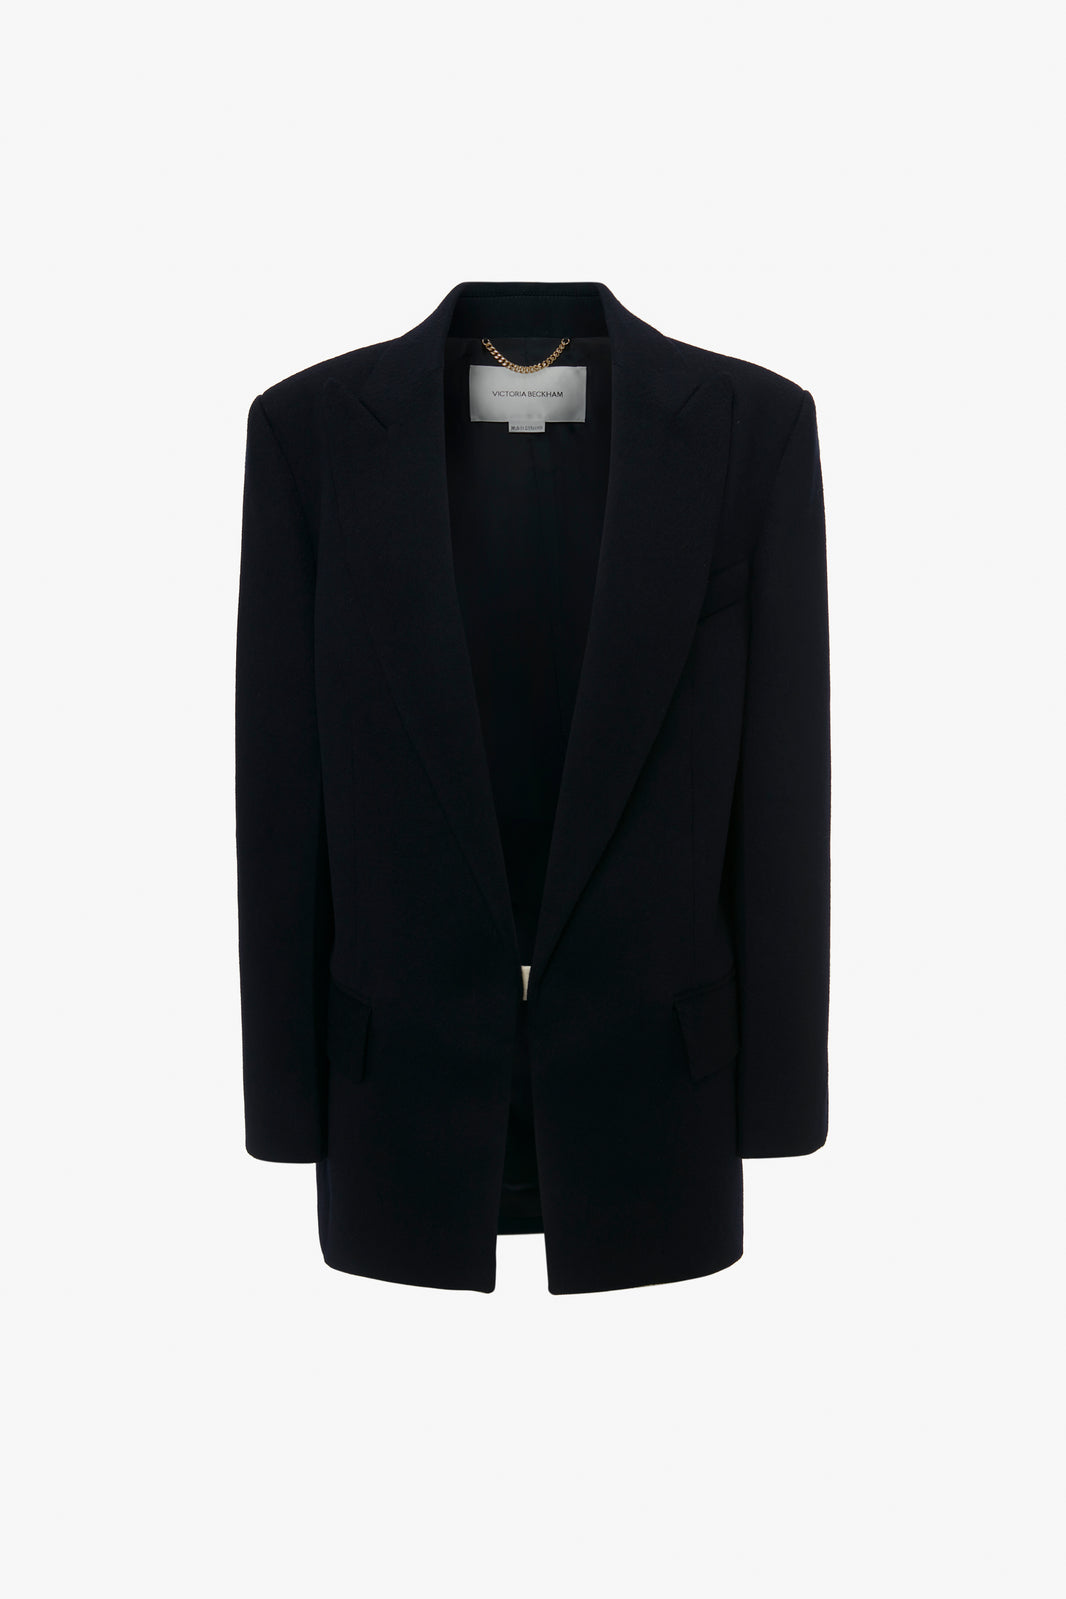 Designer Women's Coats & Jackets Collection – Victoria Beckham UK